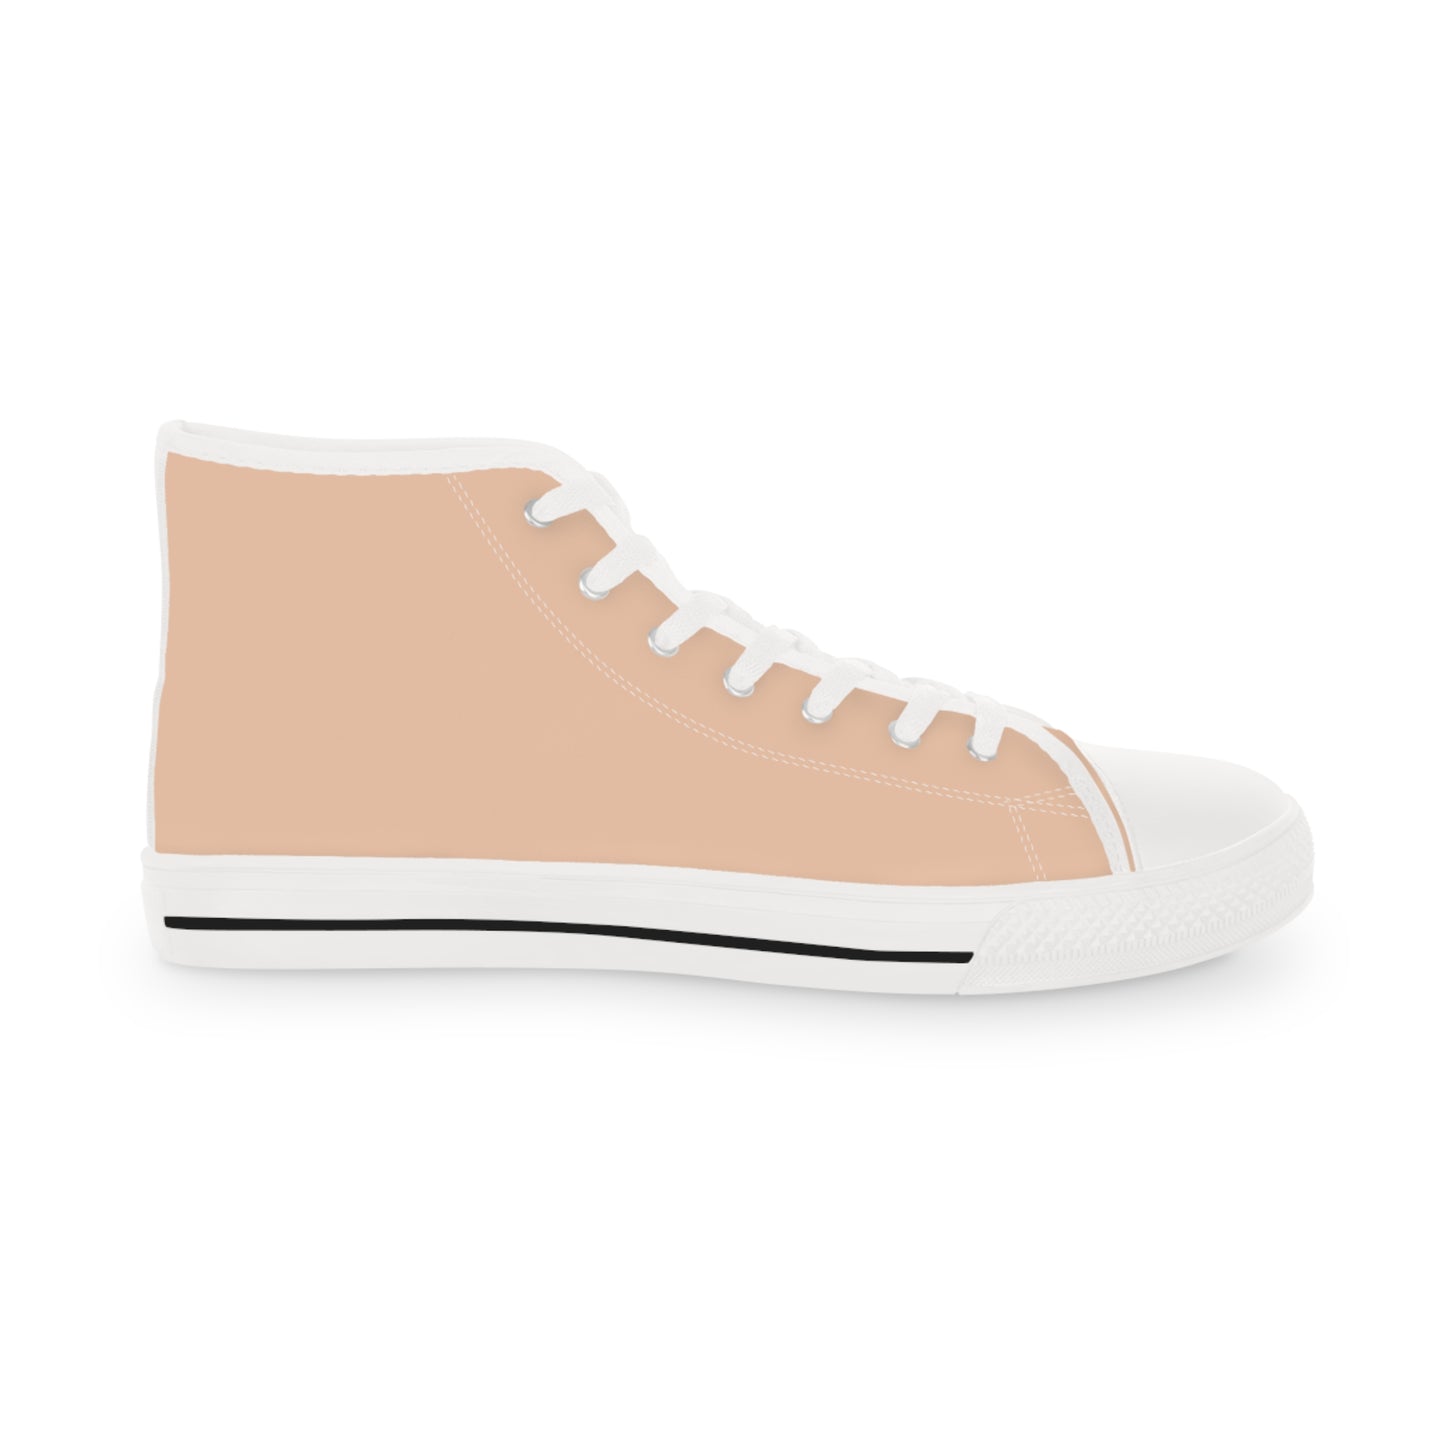 Men's Canvas High Top Solid Color Sneakers - Orange Cream US 14 White sole